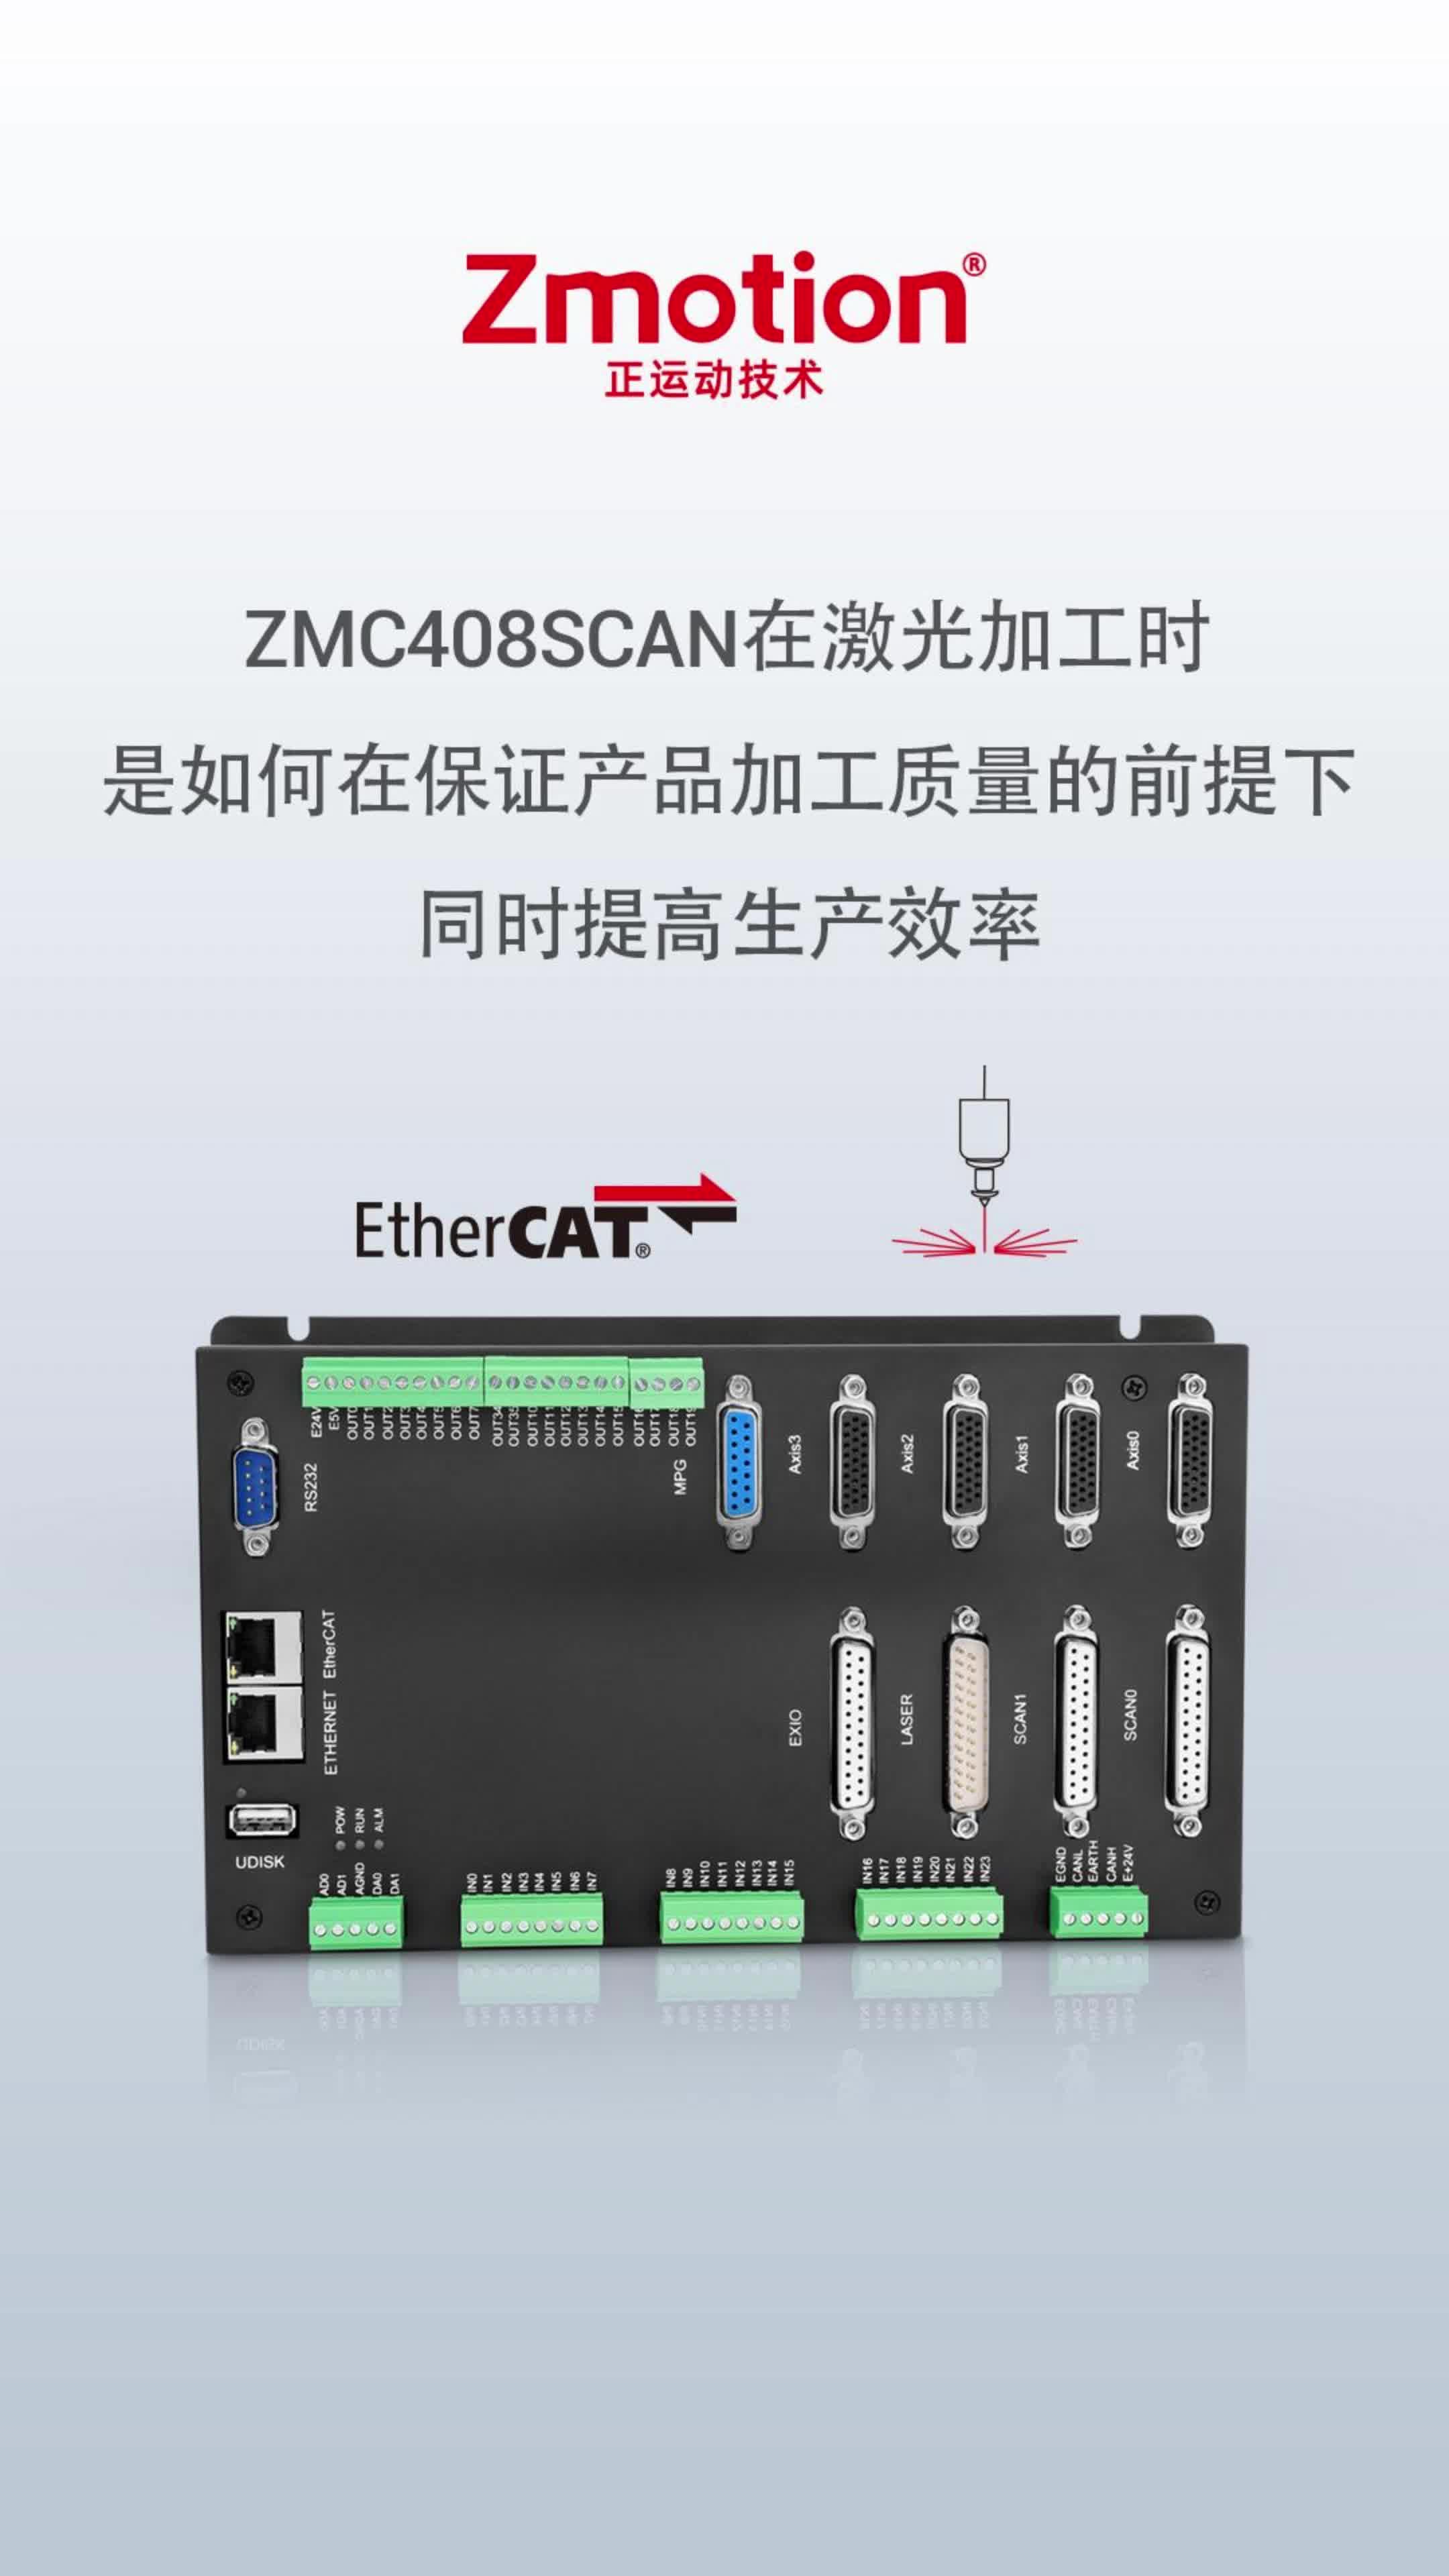 ZMC408SCAN高精度多轴联合的同步激光加工控制提高产能# 运动控制器# EtherCAT运动控制# 激光